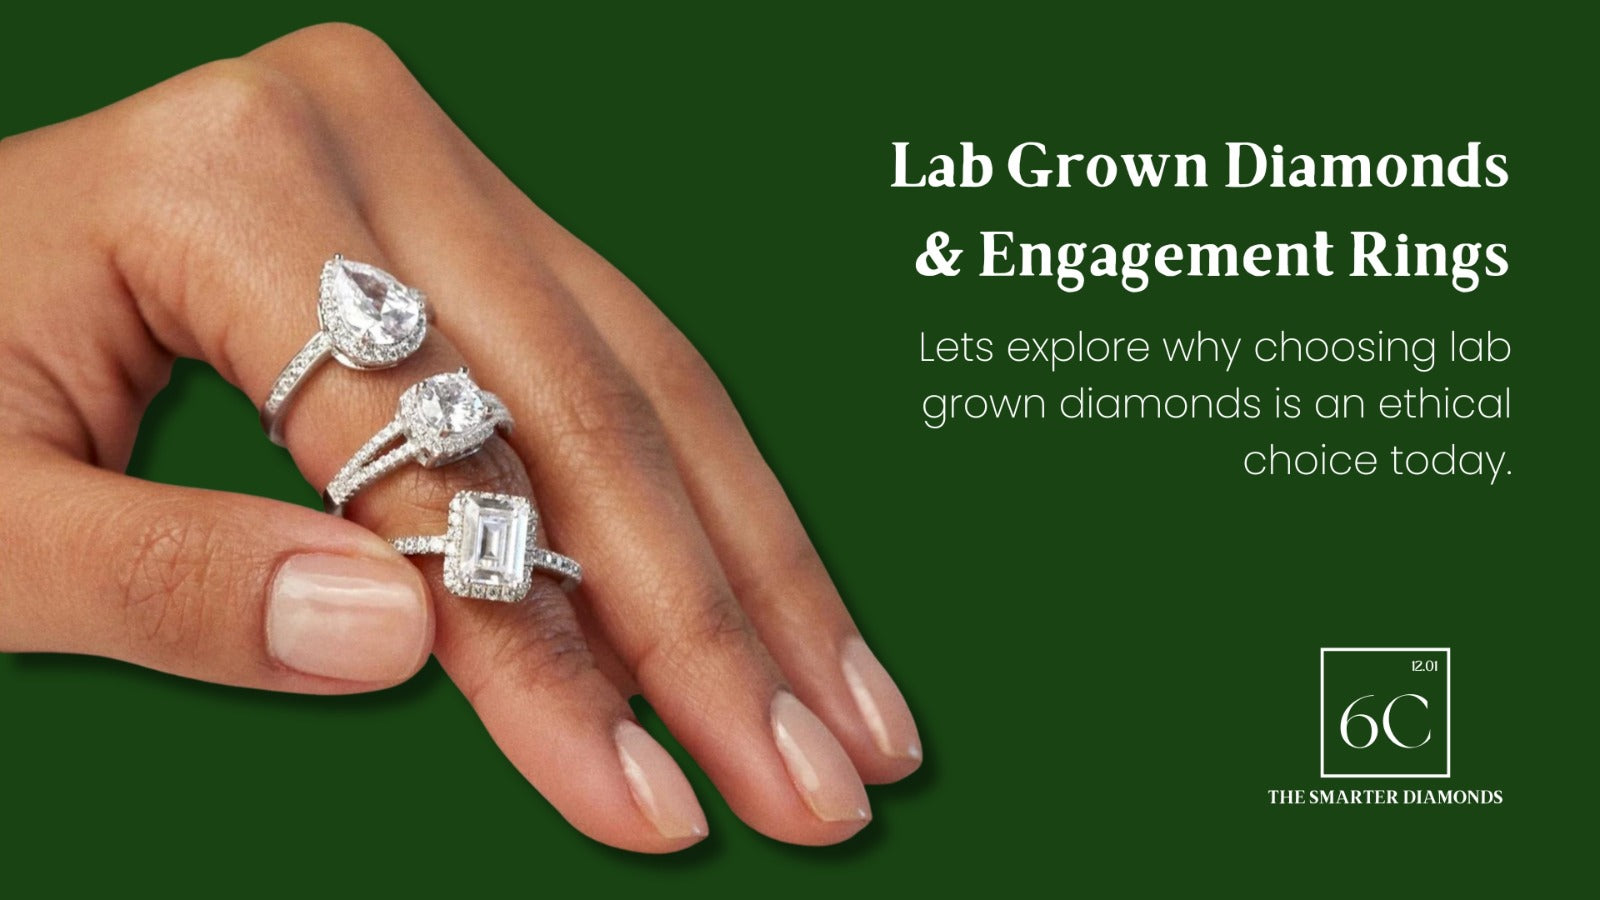 Lab Grown Diamonds in Engagement Rings